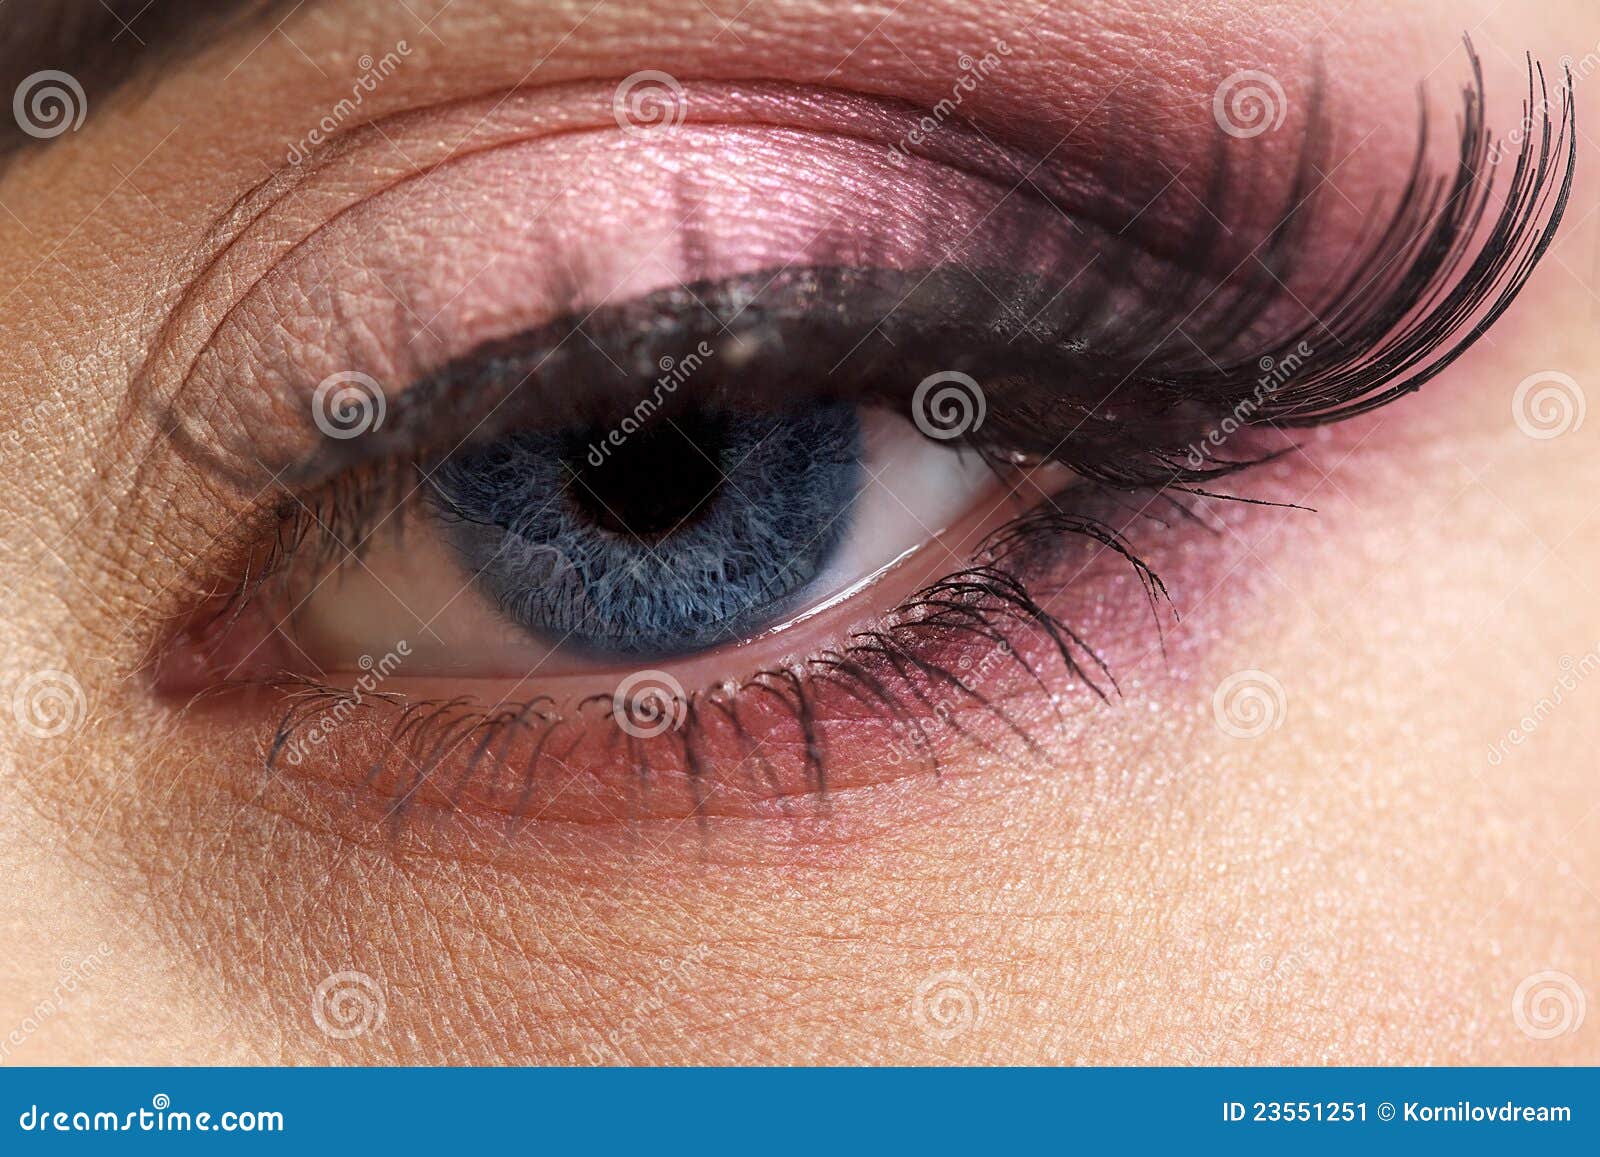  Female  eye  stock image Image of angle beauty creative 